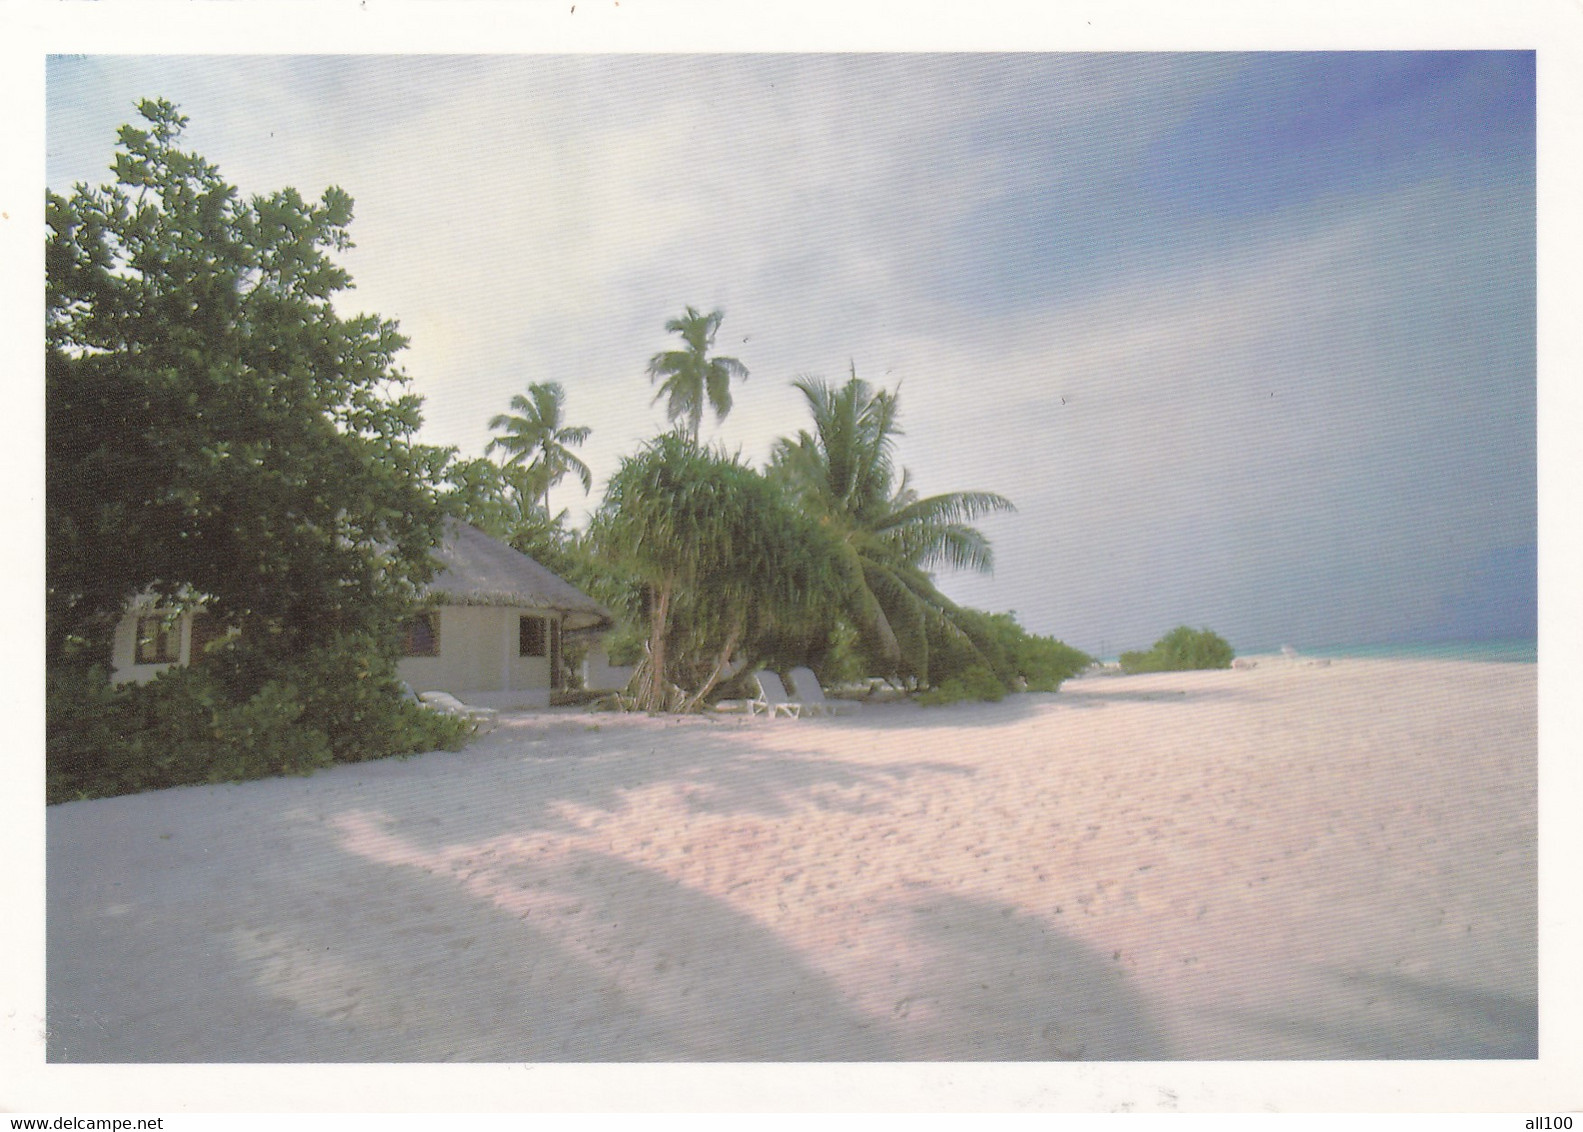 A20579 - MALDIVES VELAVARU ISLAND POST CARD USED STAMP MALDIVES ROSA MULTIFLORA SENT TO SWITZERLAND BEACH PALM TREES - Maldiven